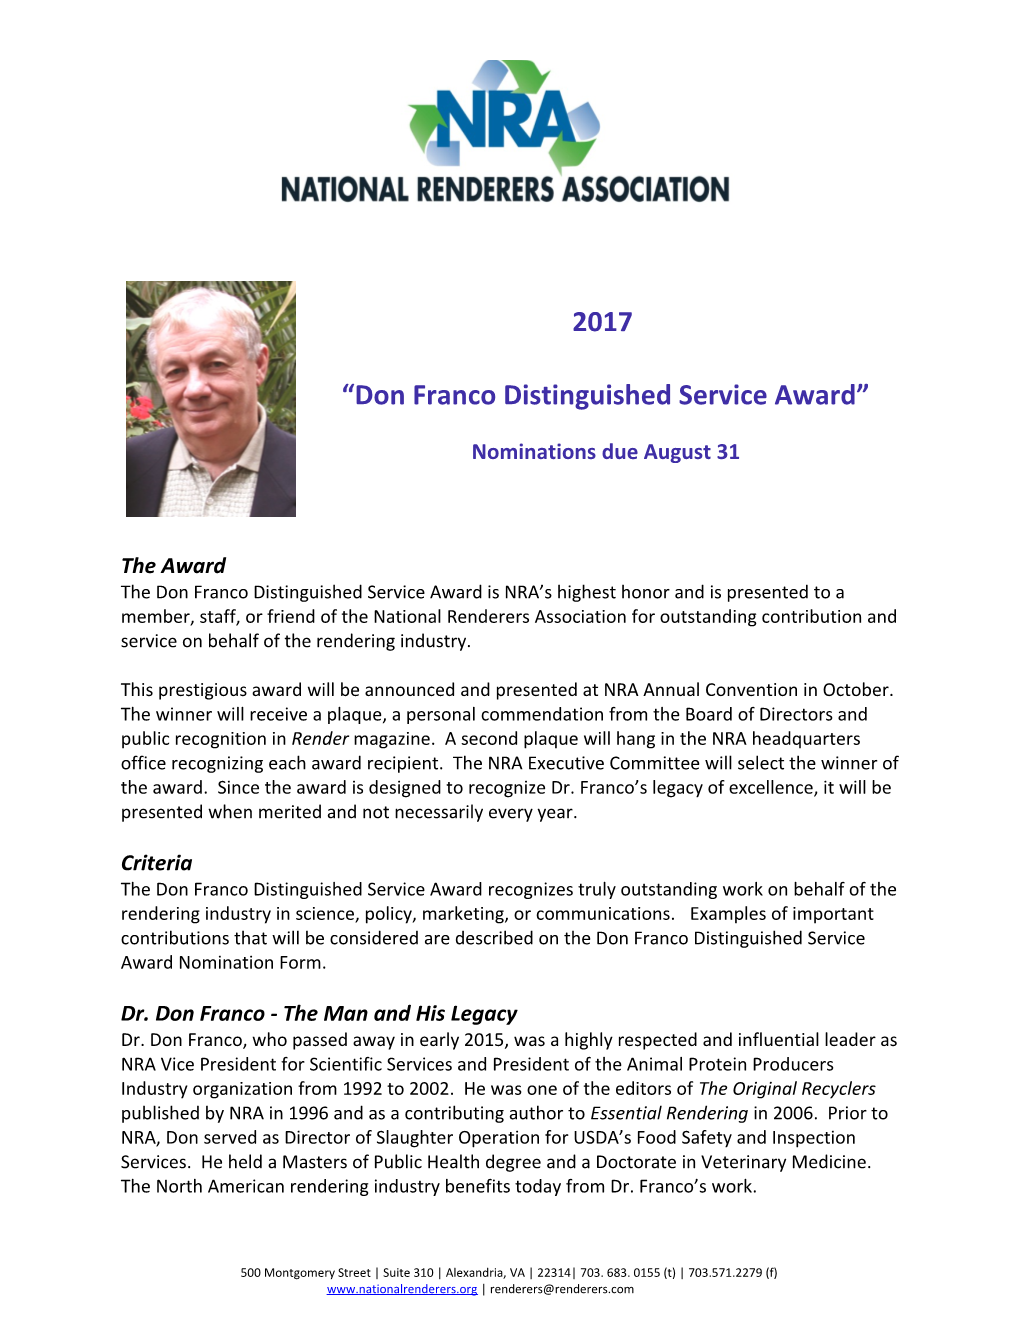 Don Franco Distinguished Service Award